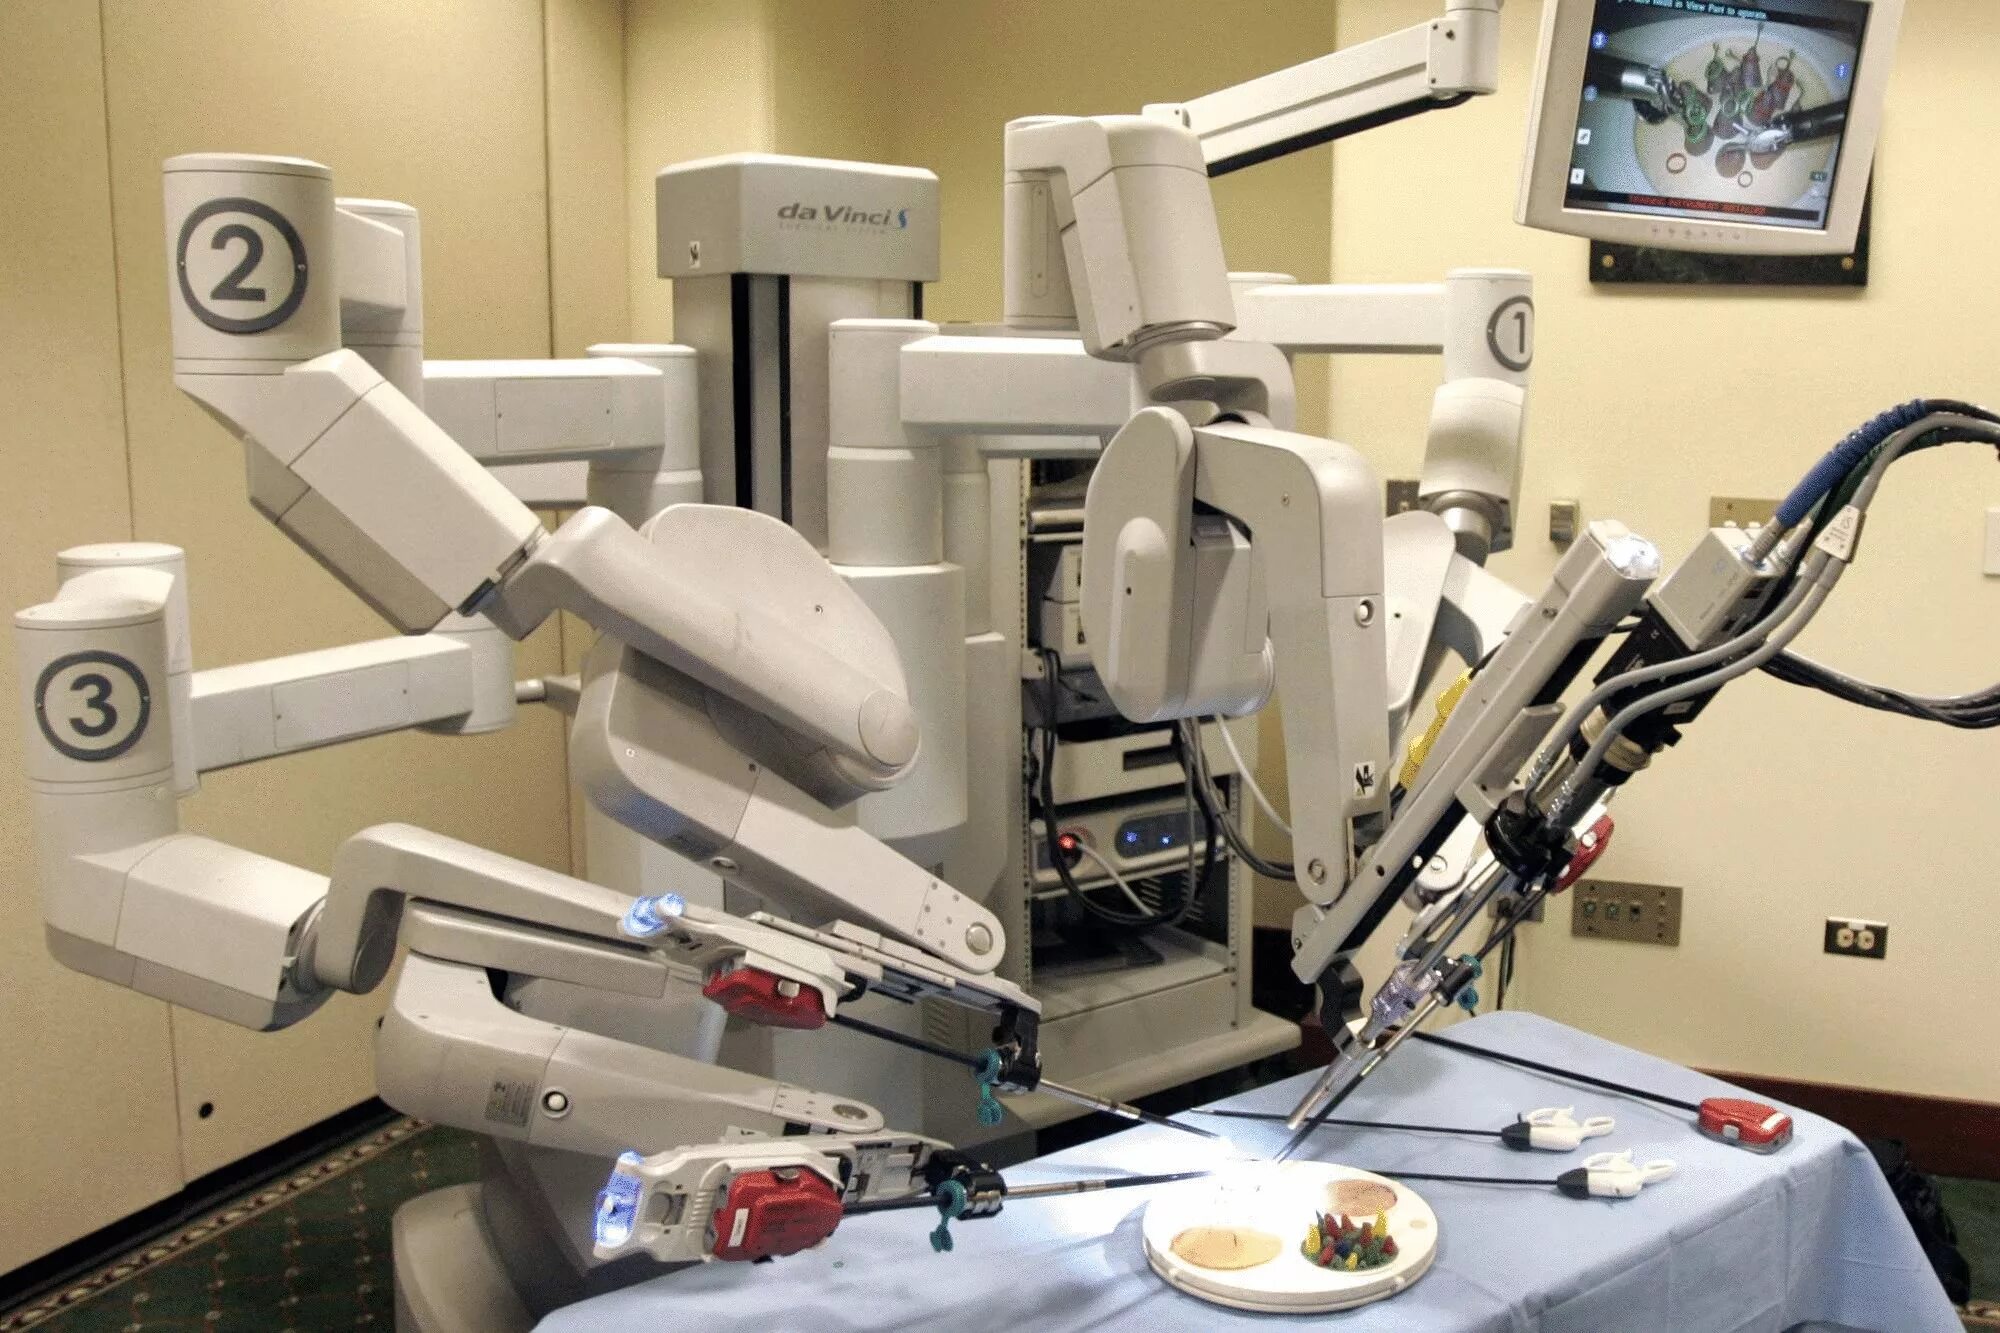 Da Vinci робот-хирург. Робот DAVINCI. Хирургический робот DAVINCI. Робот робот-хирург DAVINCI.